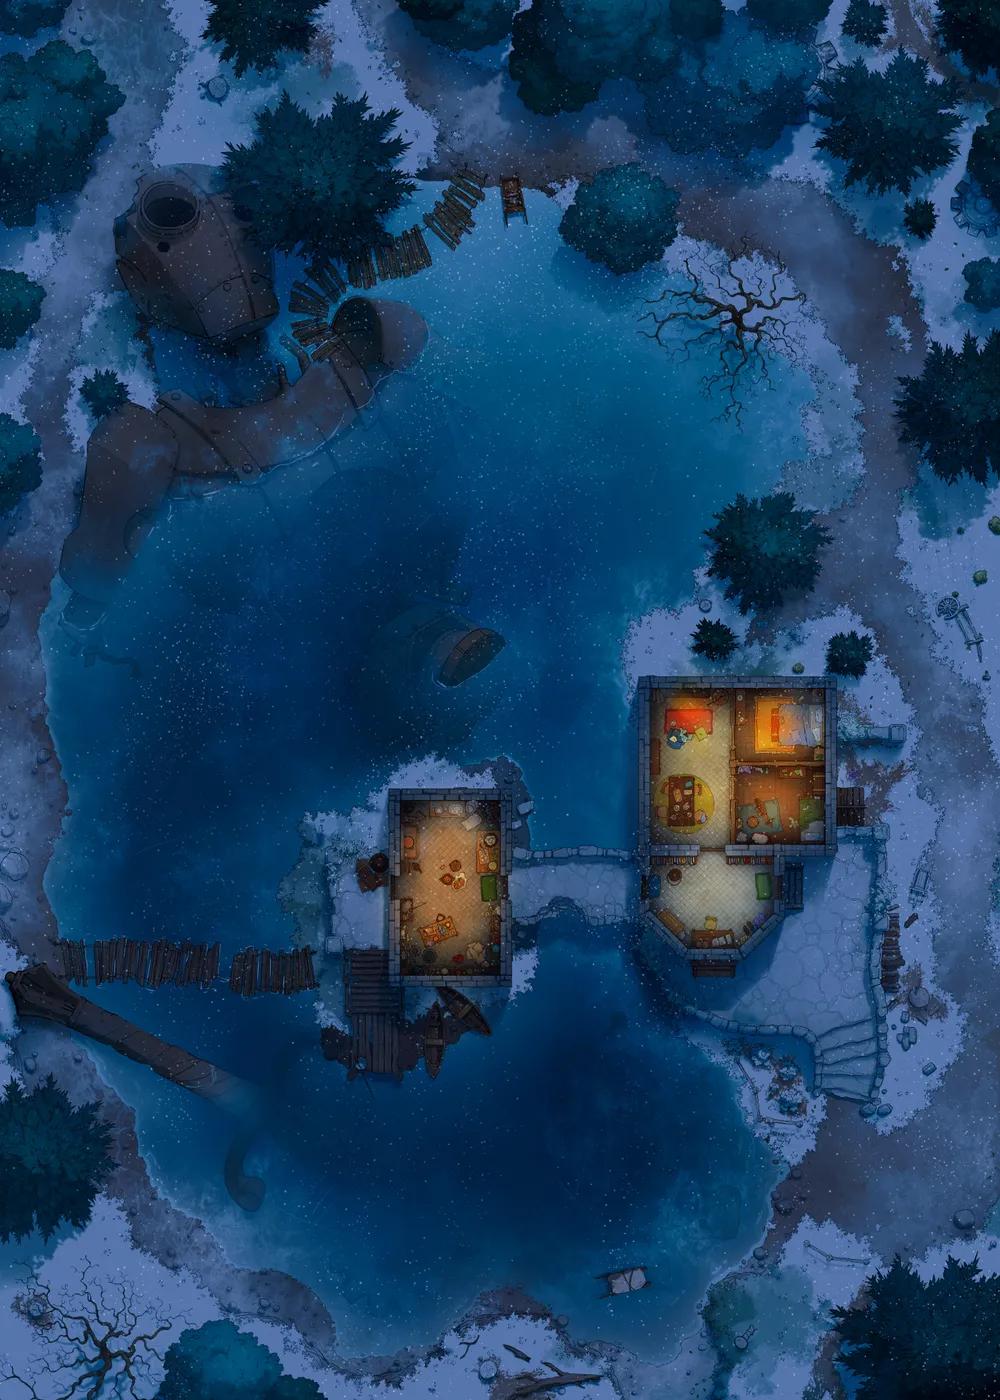 Rusty Robot Lake map, Winter Night variant